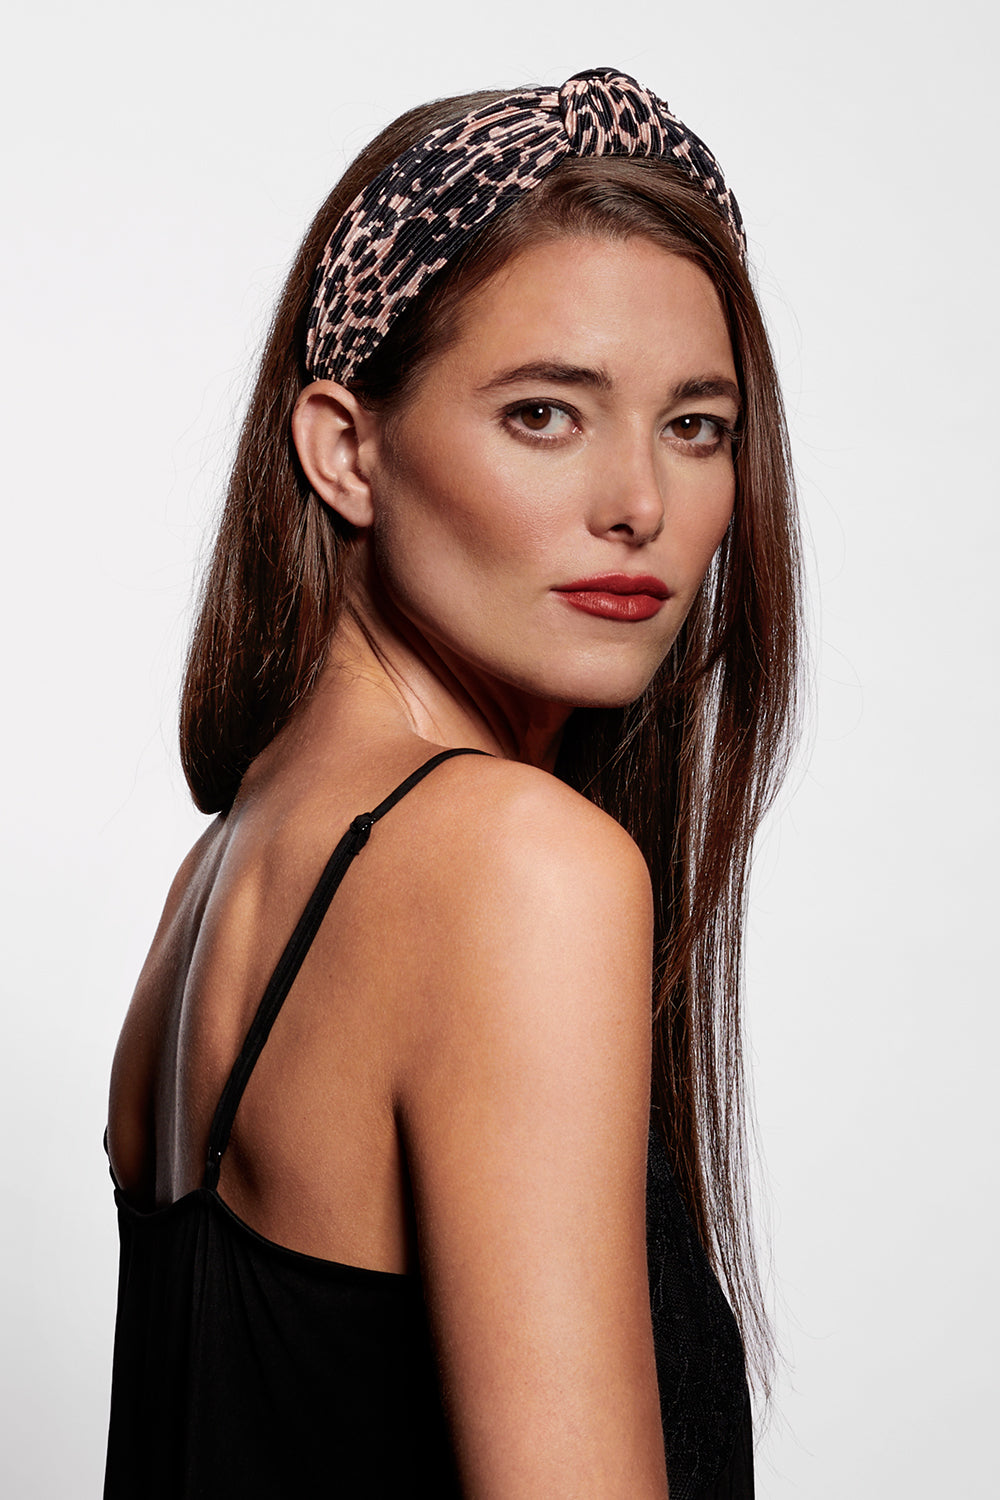 Lystrfac New Fashion Print Leopard Scrunchy Headband for Women Girls Trendy  Pleated Hairband Female Headpieces Hair Accessories